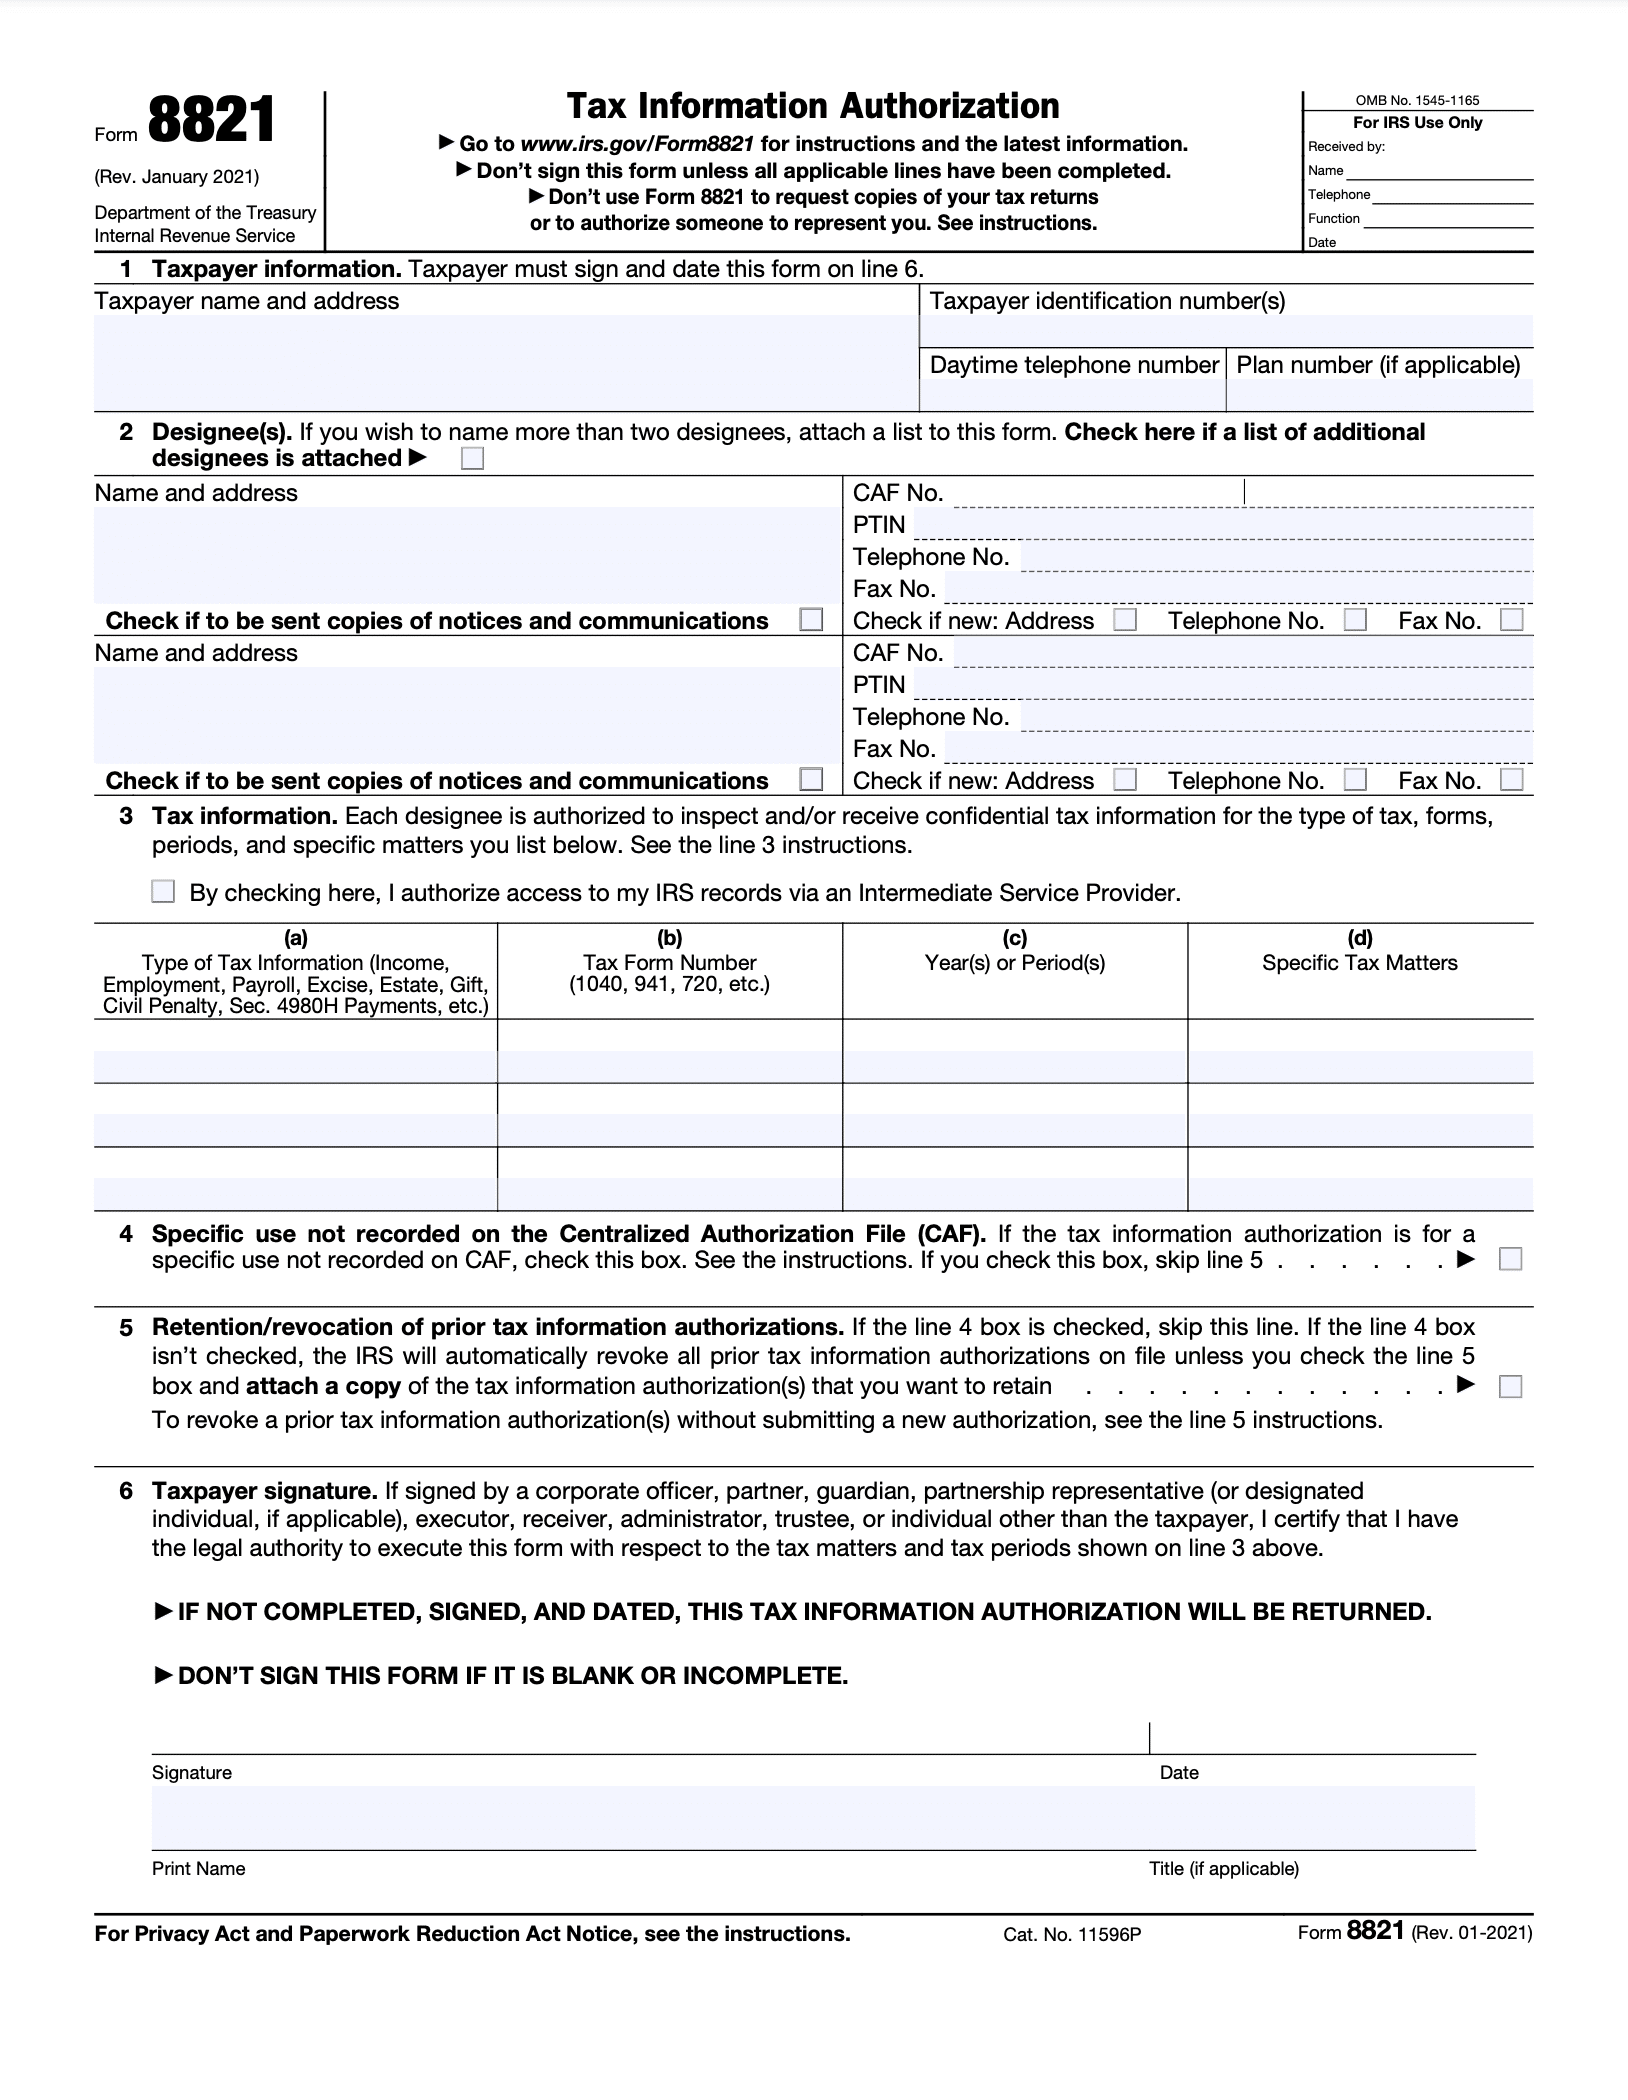 screenshot of IRS form 8821